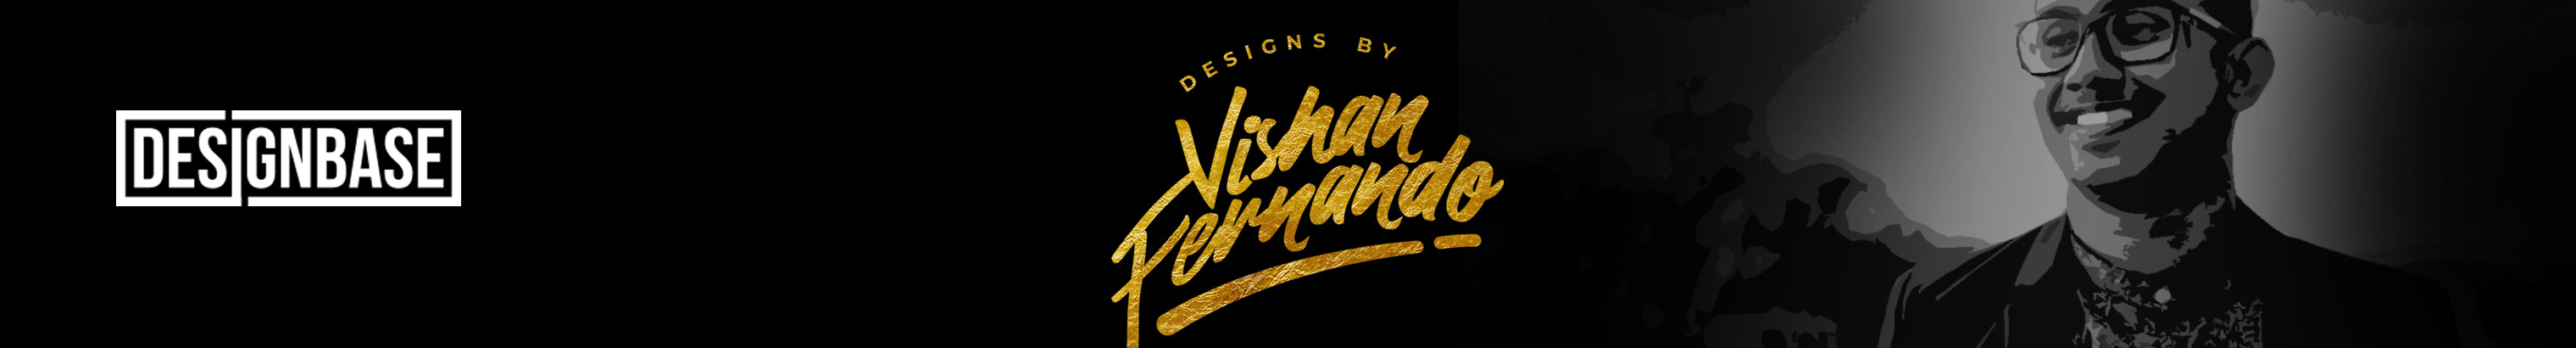 Vishan Fernando's profile banner